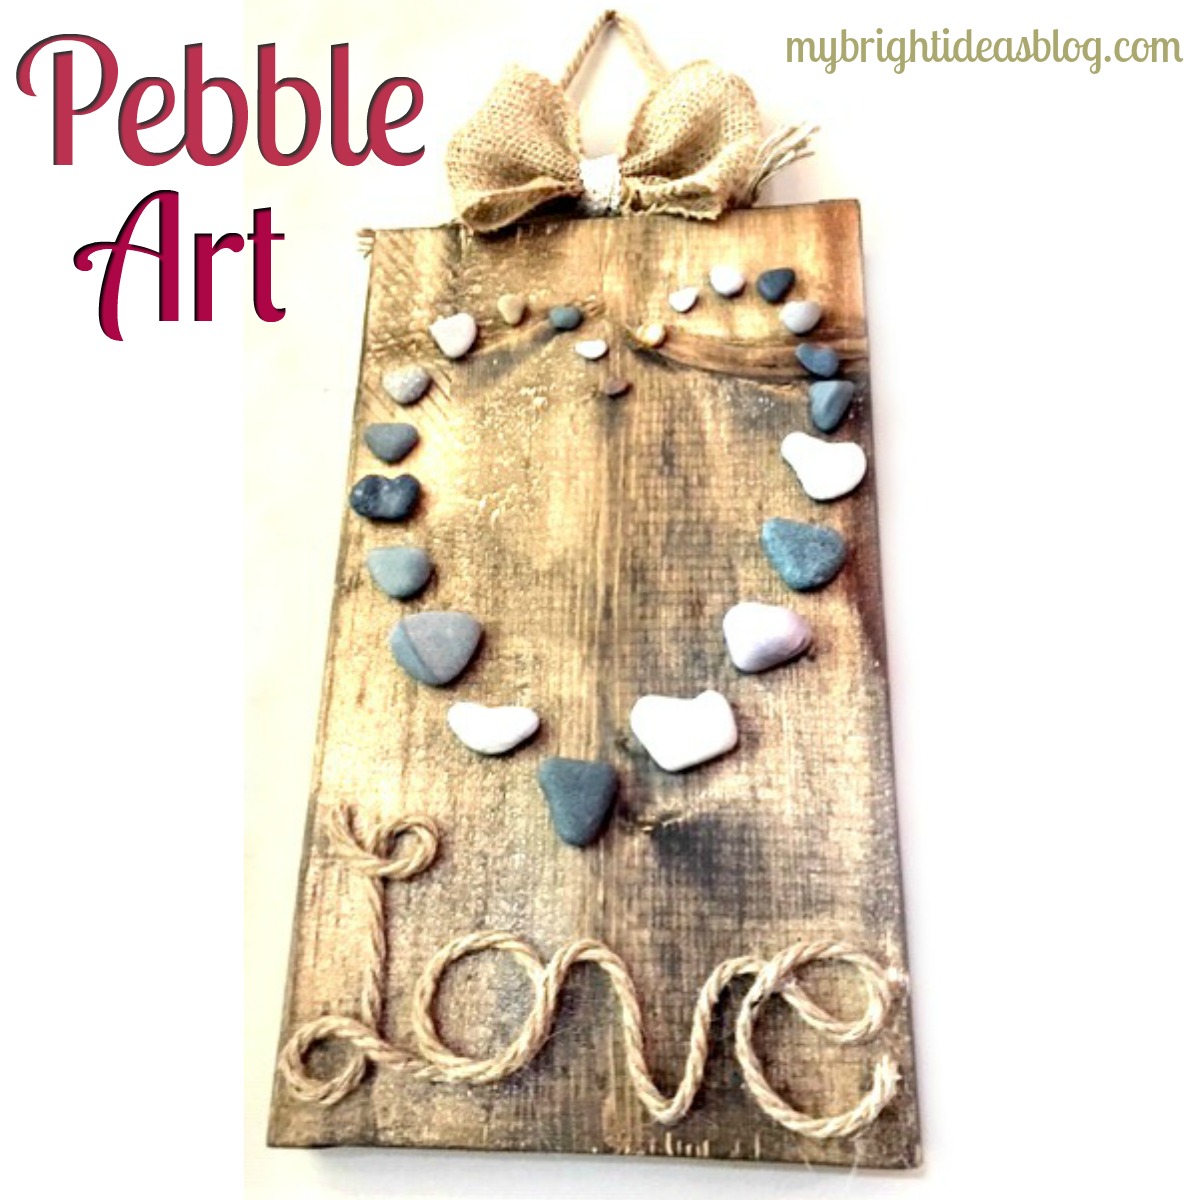 Make a heart / love sign for home decor using heart shaped pebbles and jute rope. mybrightideasblog.com